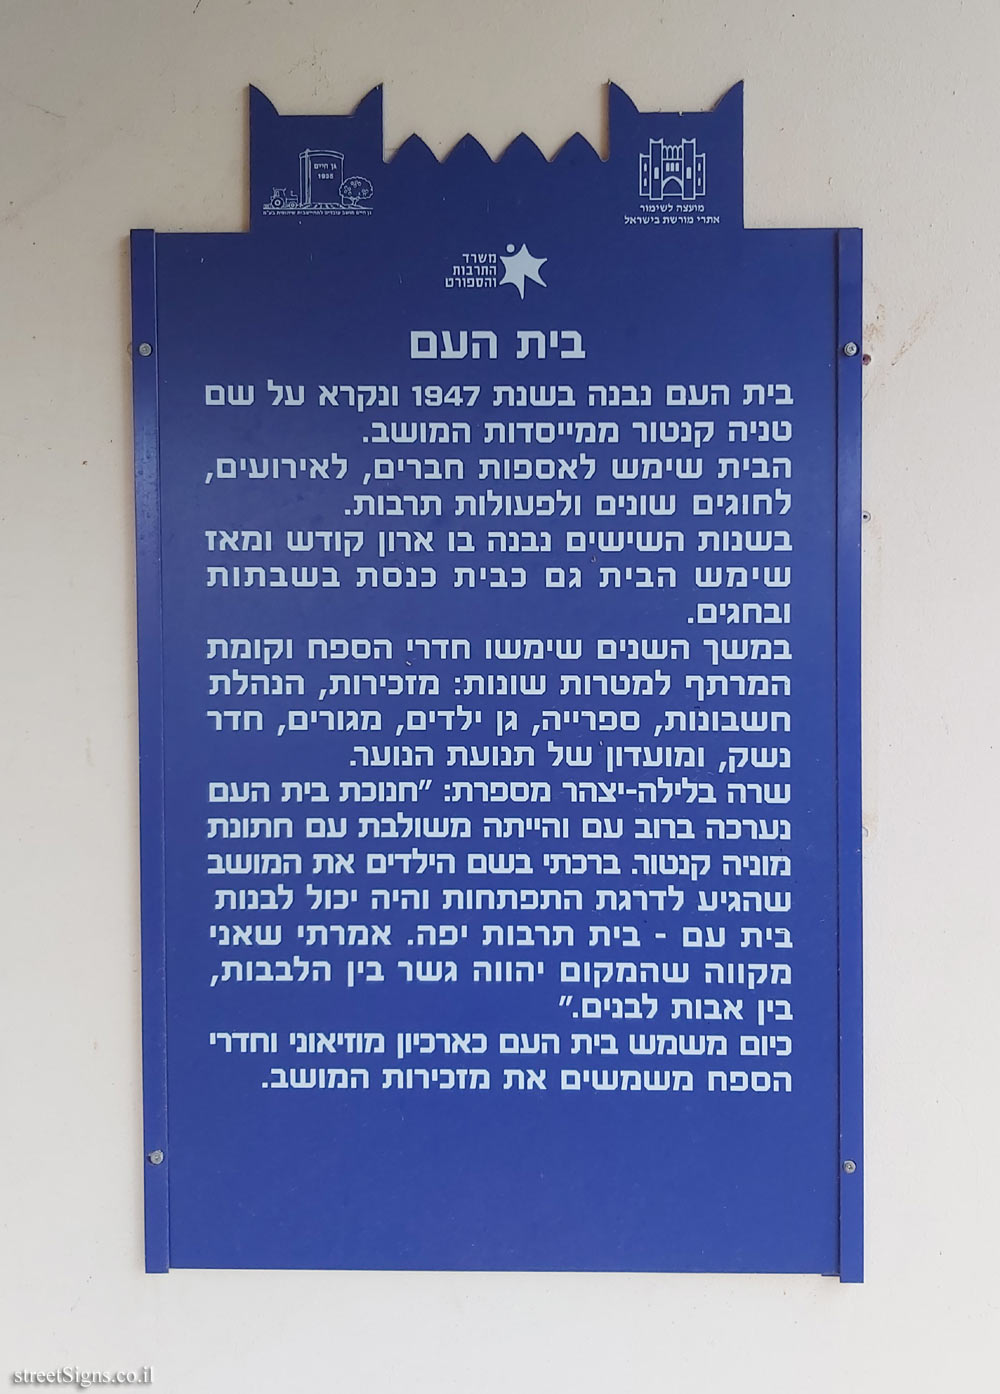 Gan Haim - Heritage Sites in Israel - The House of the People